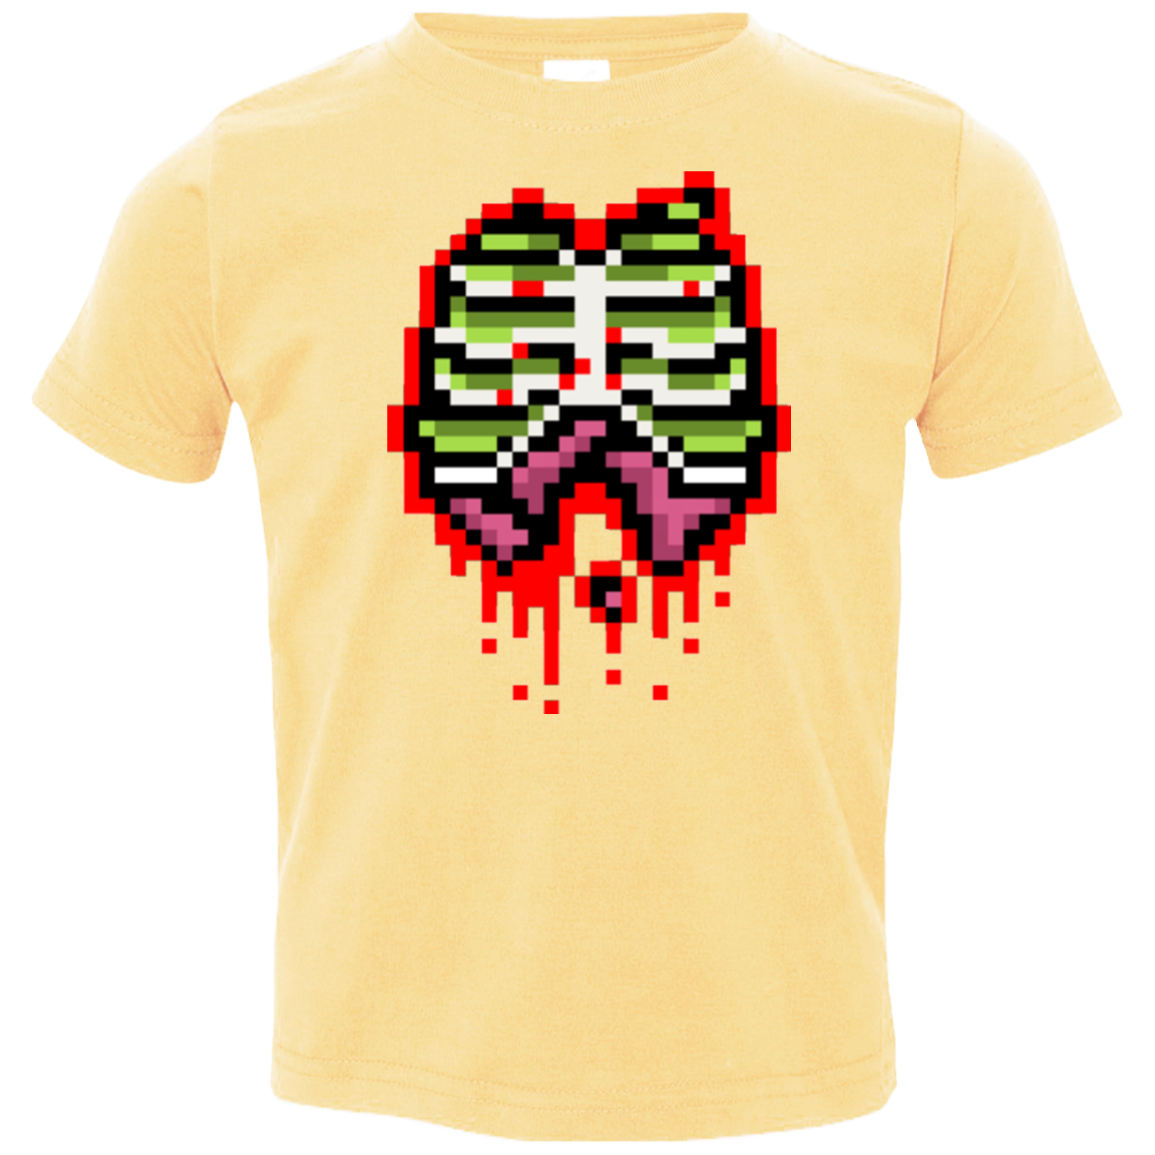 Zombie Guts Toddler Premium T-Shirt